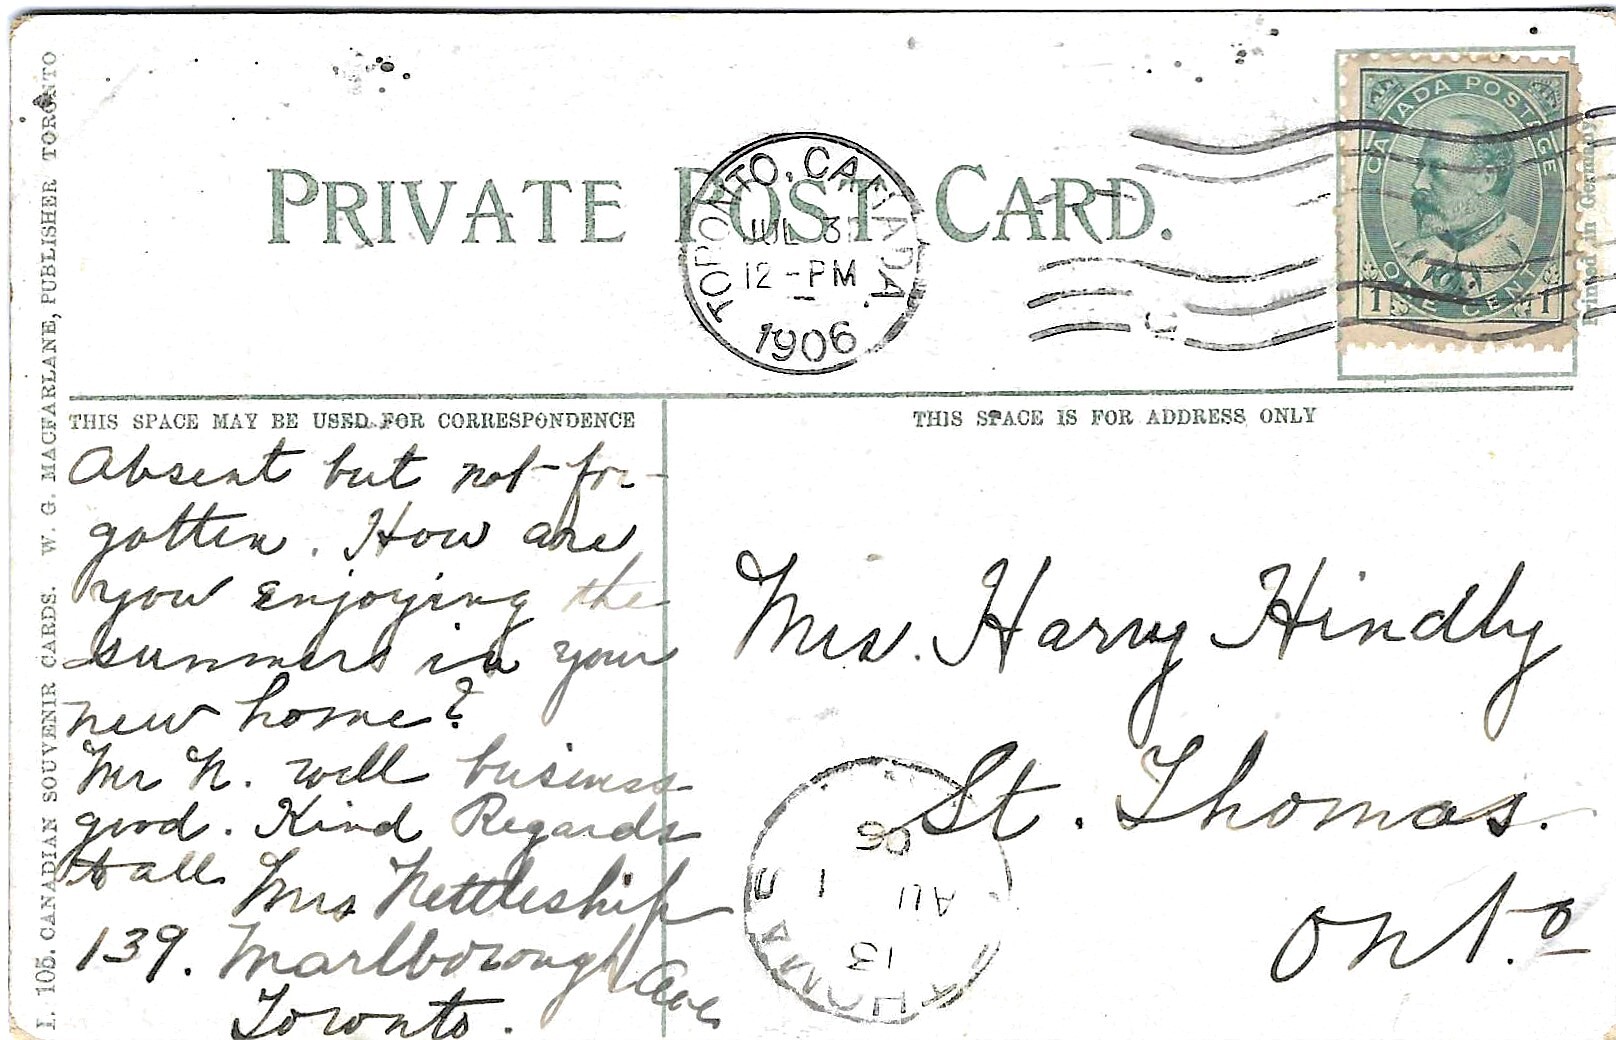 Private postcard of Toronto University, Toronto, Canada, posted 1906